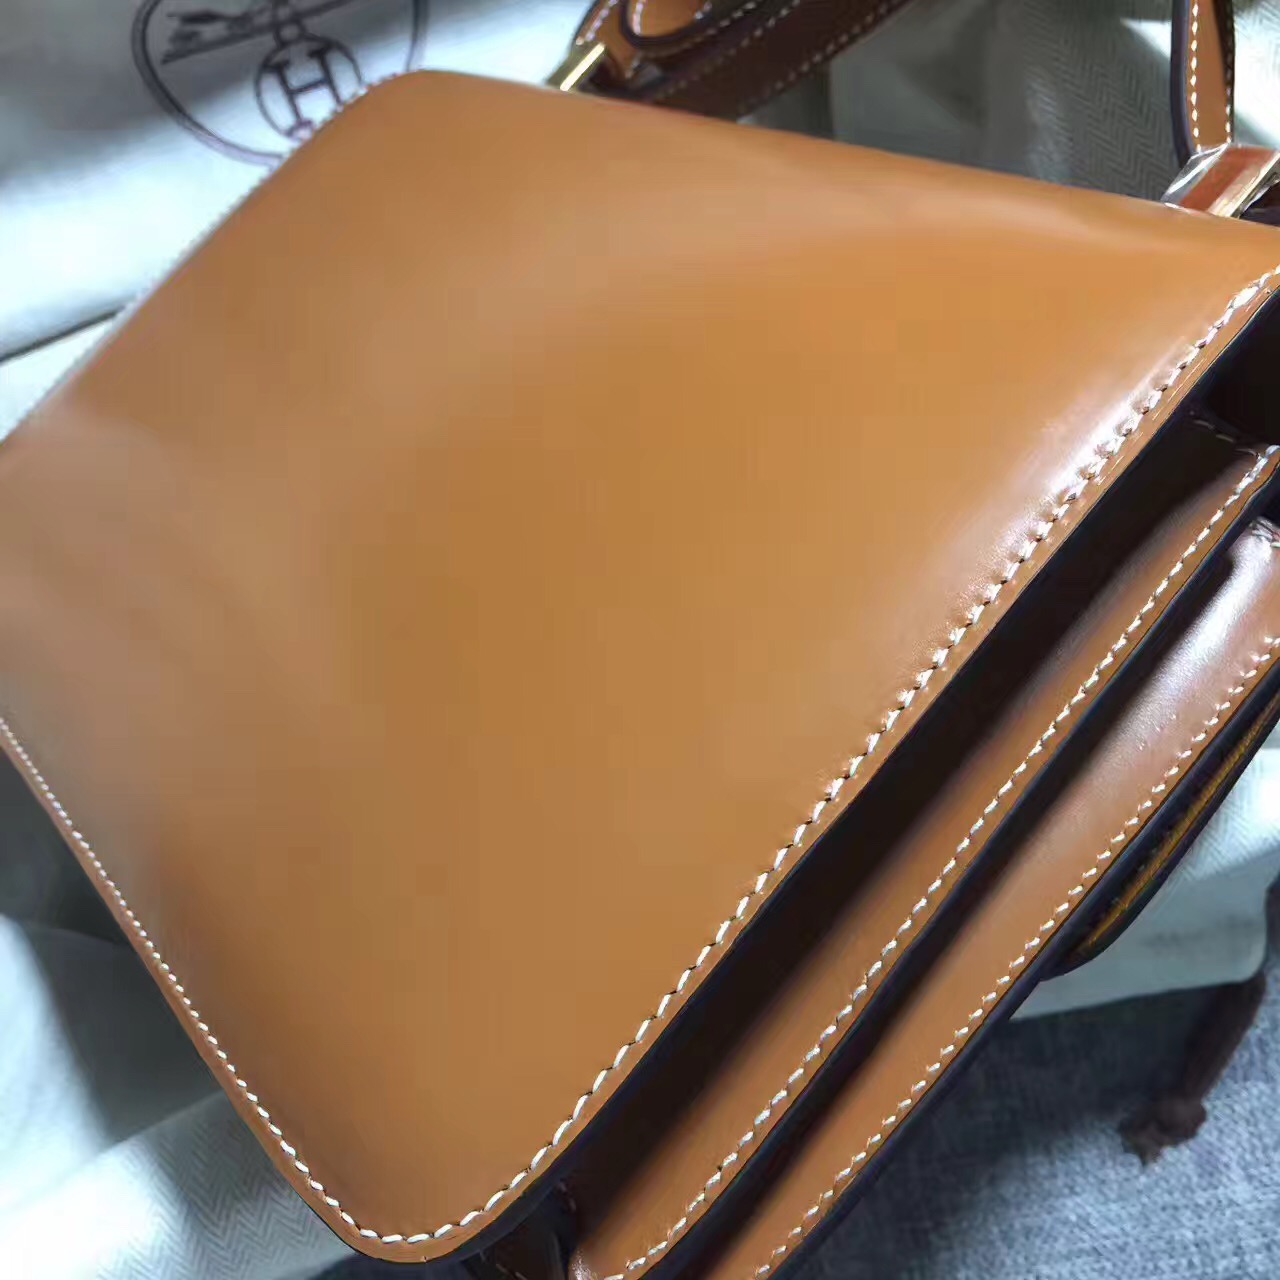 Hermes original box leather constance bag C023 coffee